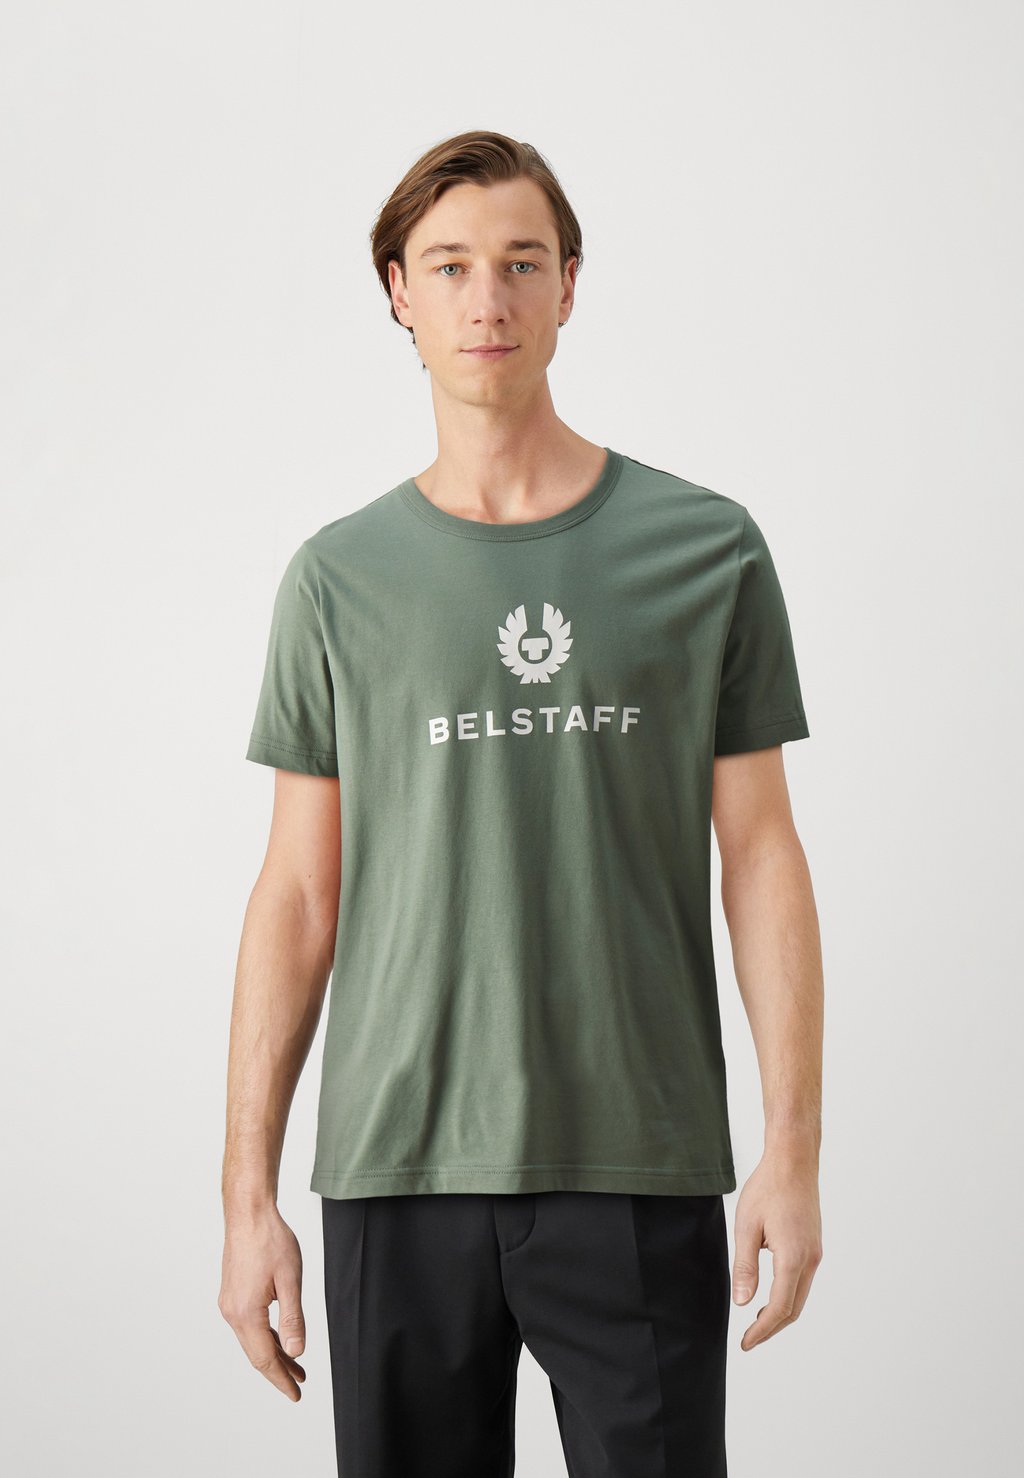 футболка с длинными рукавами long sleved belstaff цвет mineral green Футболка с принтом BELSTAFF SIGNATURE, цвет mineral green